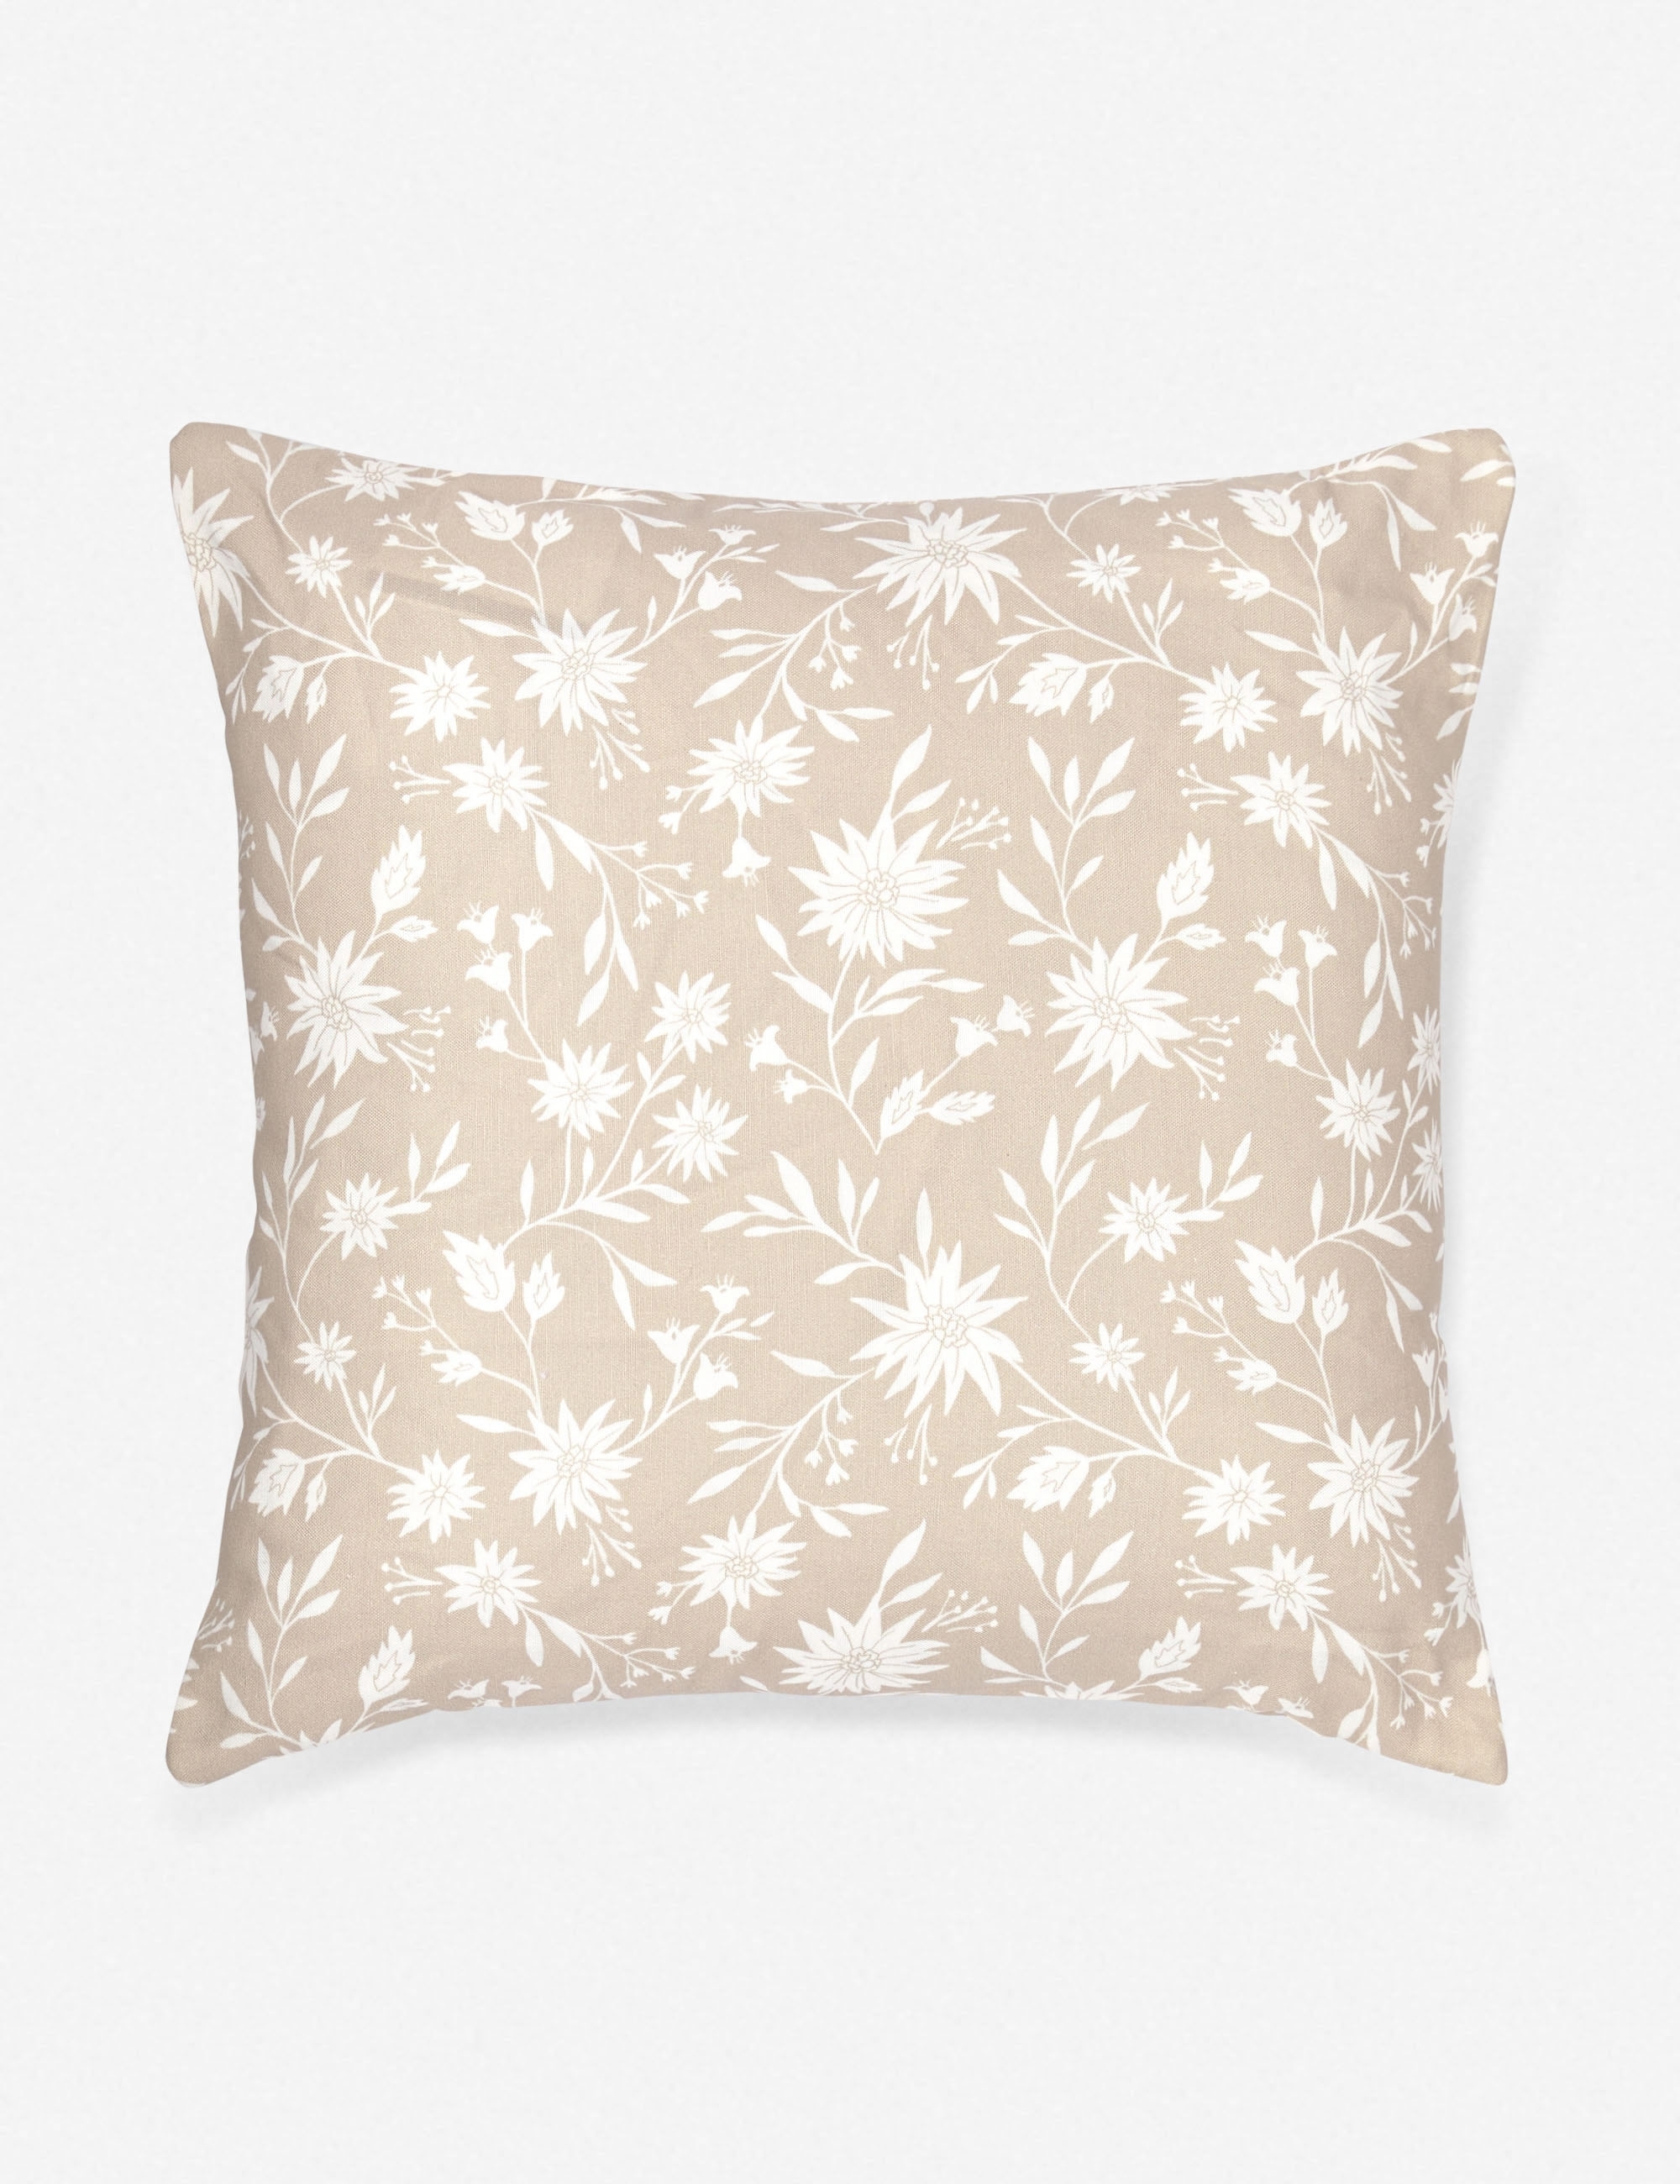 Rylee + Cru Floral Pillow - Image 0